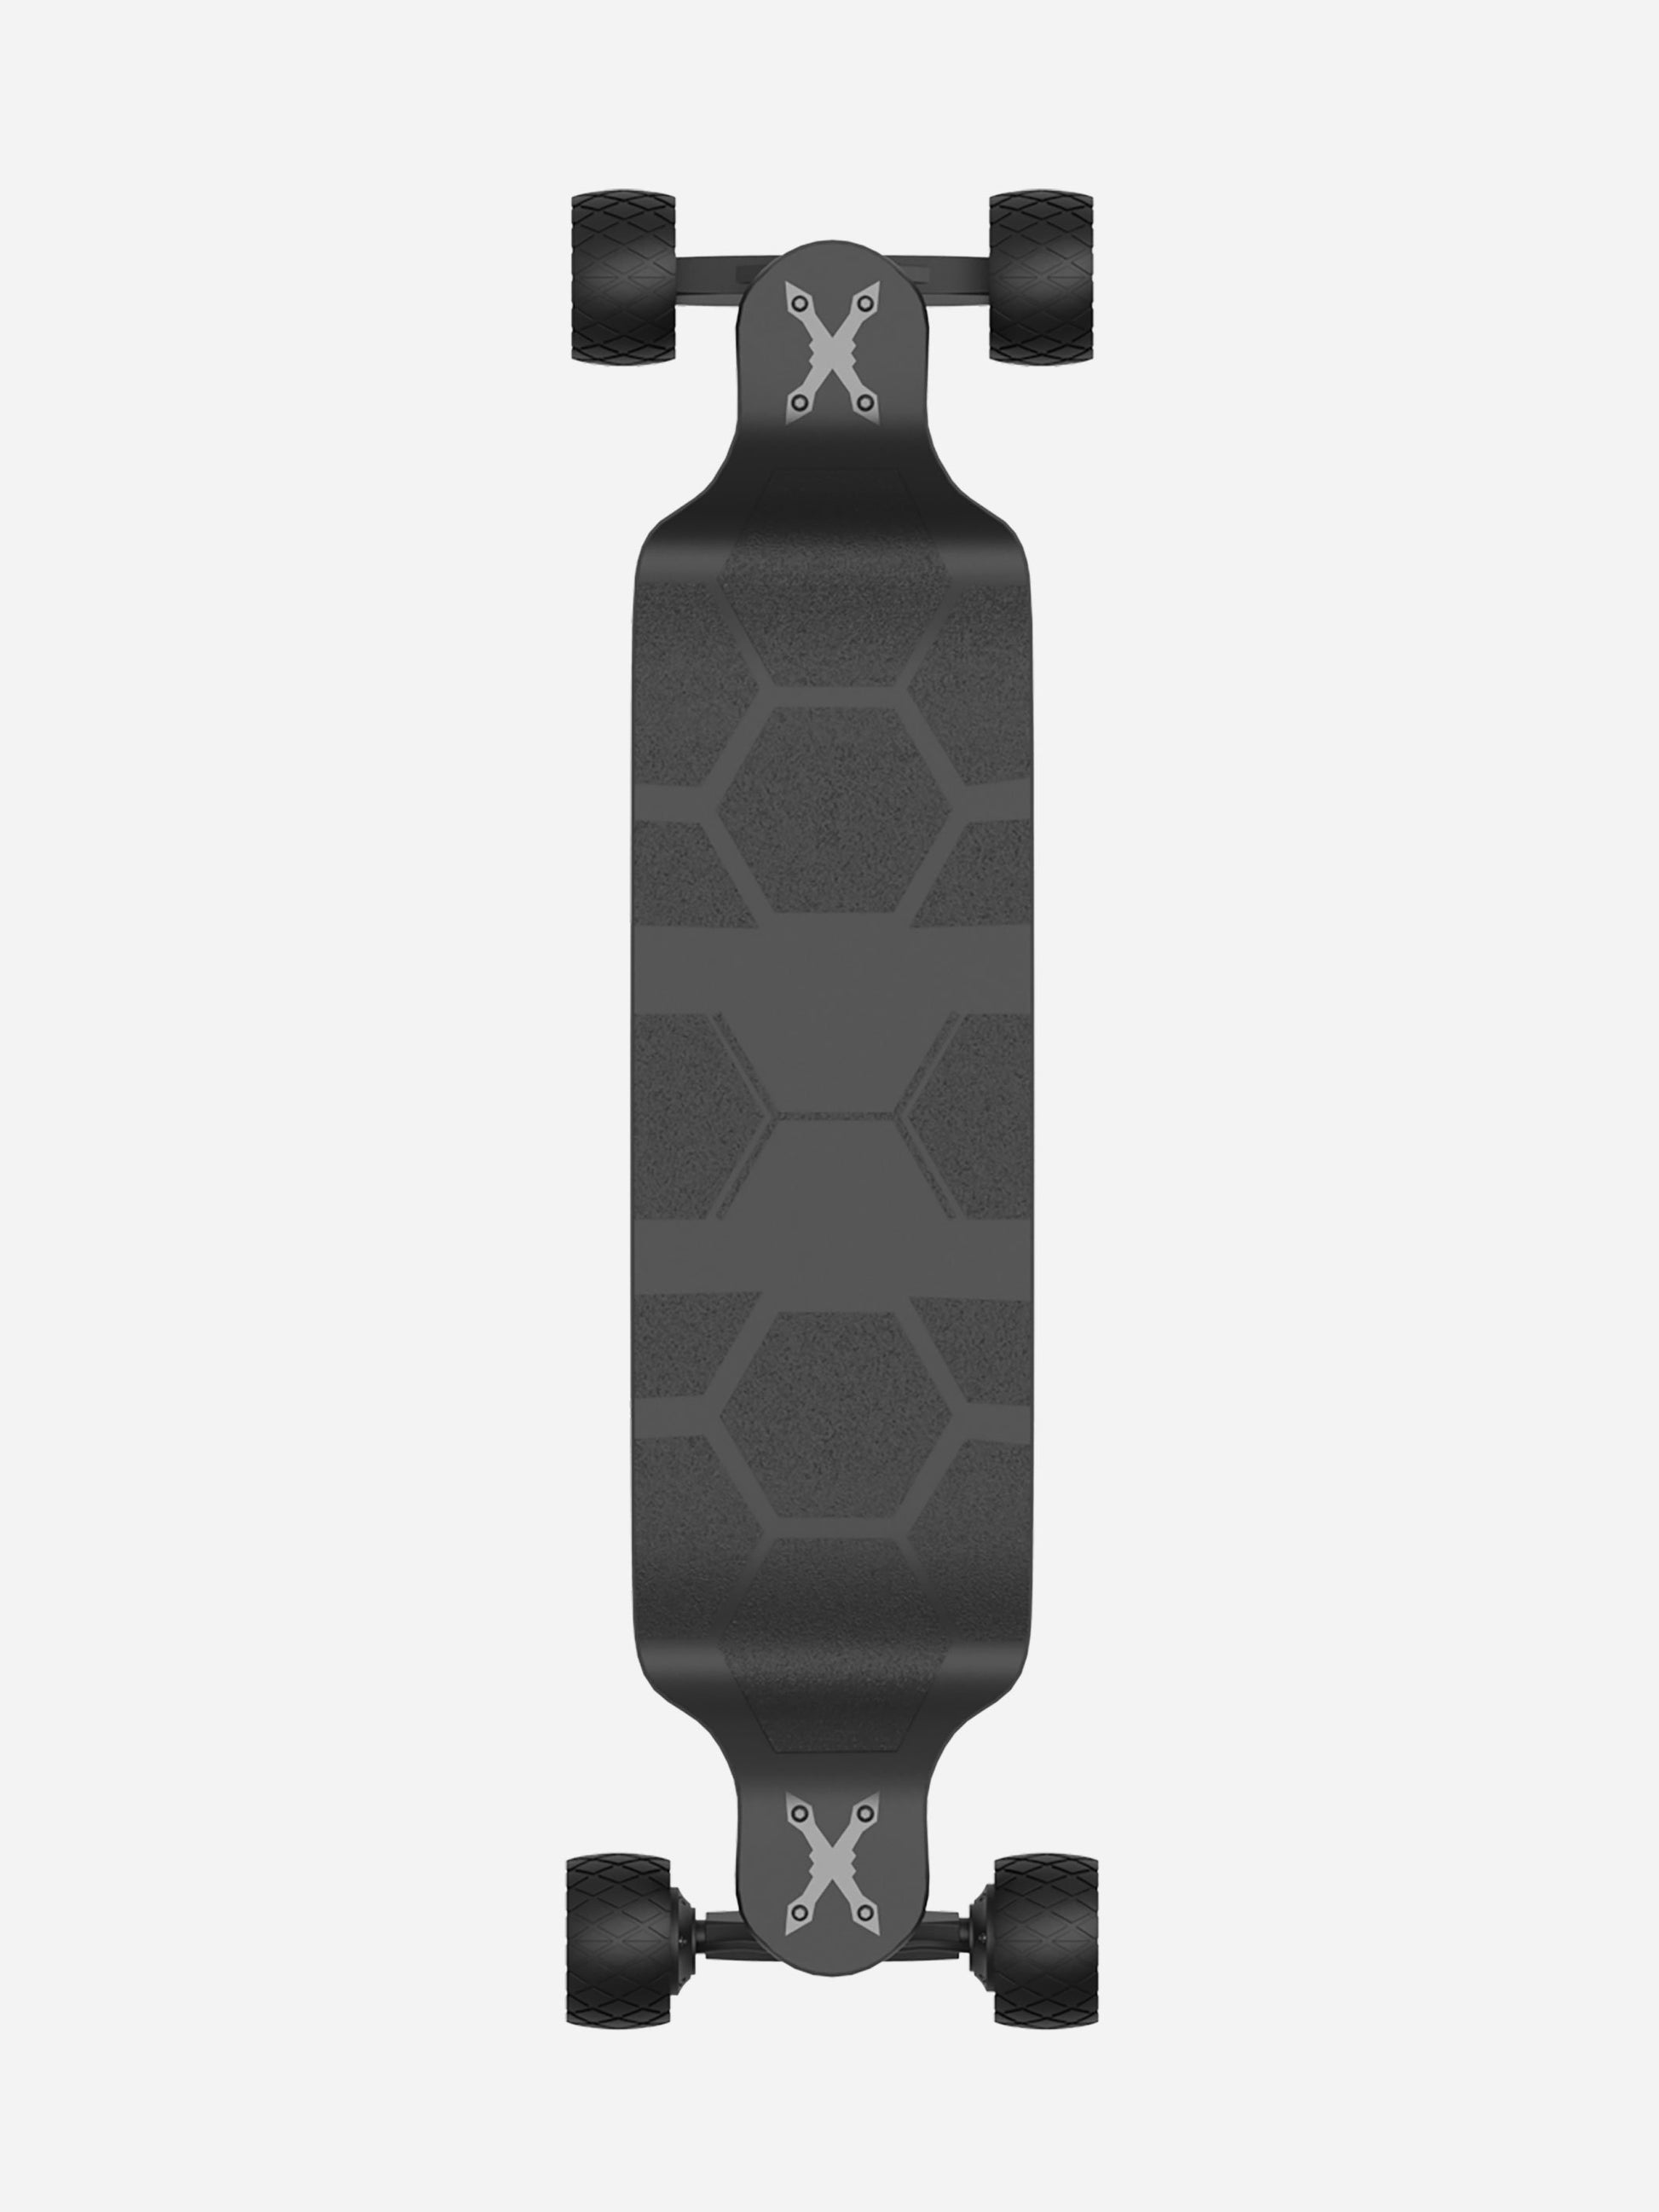 Jupiter-X-All-Terrain-Electric-Skateboard-Top